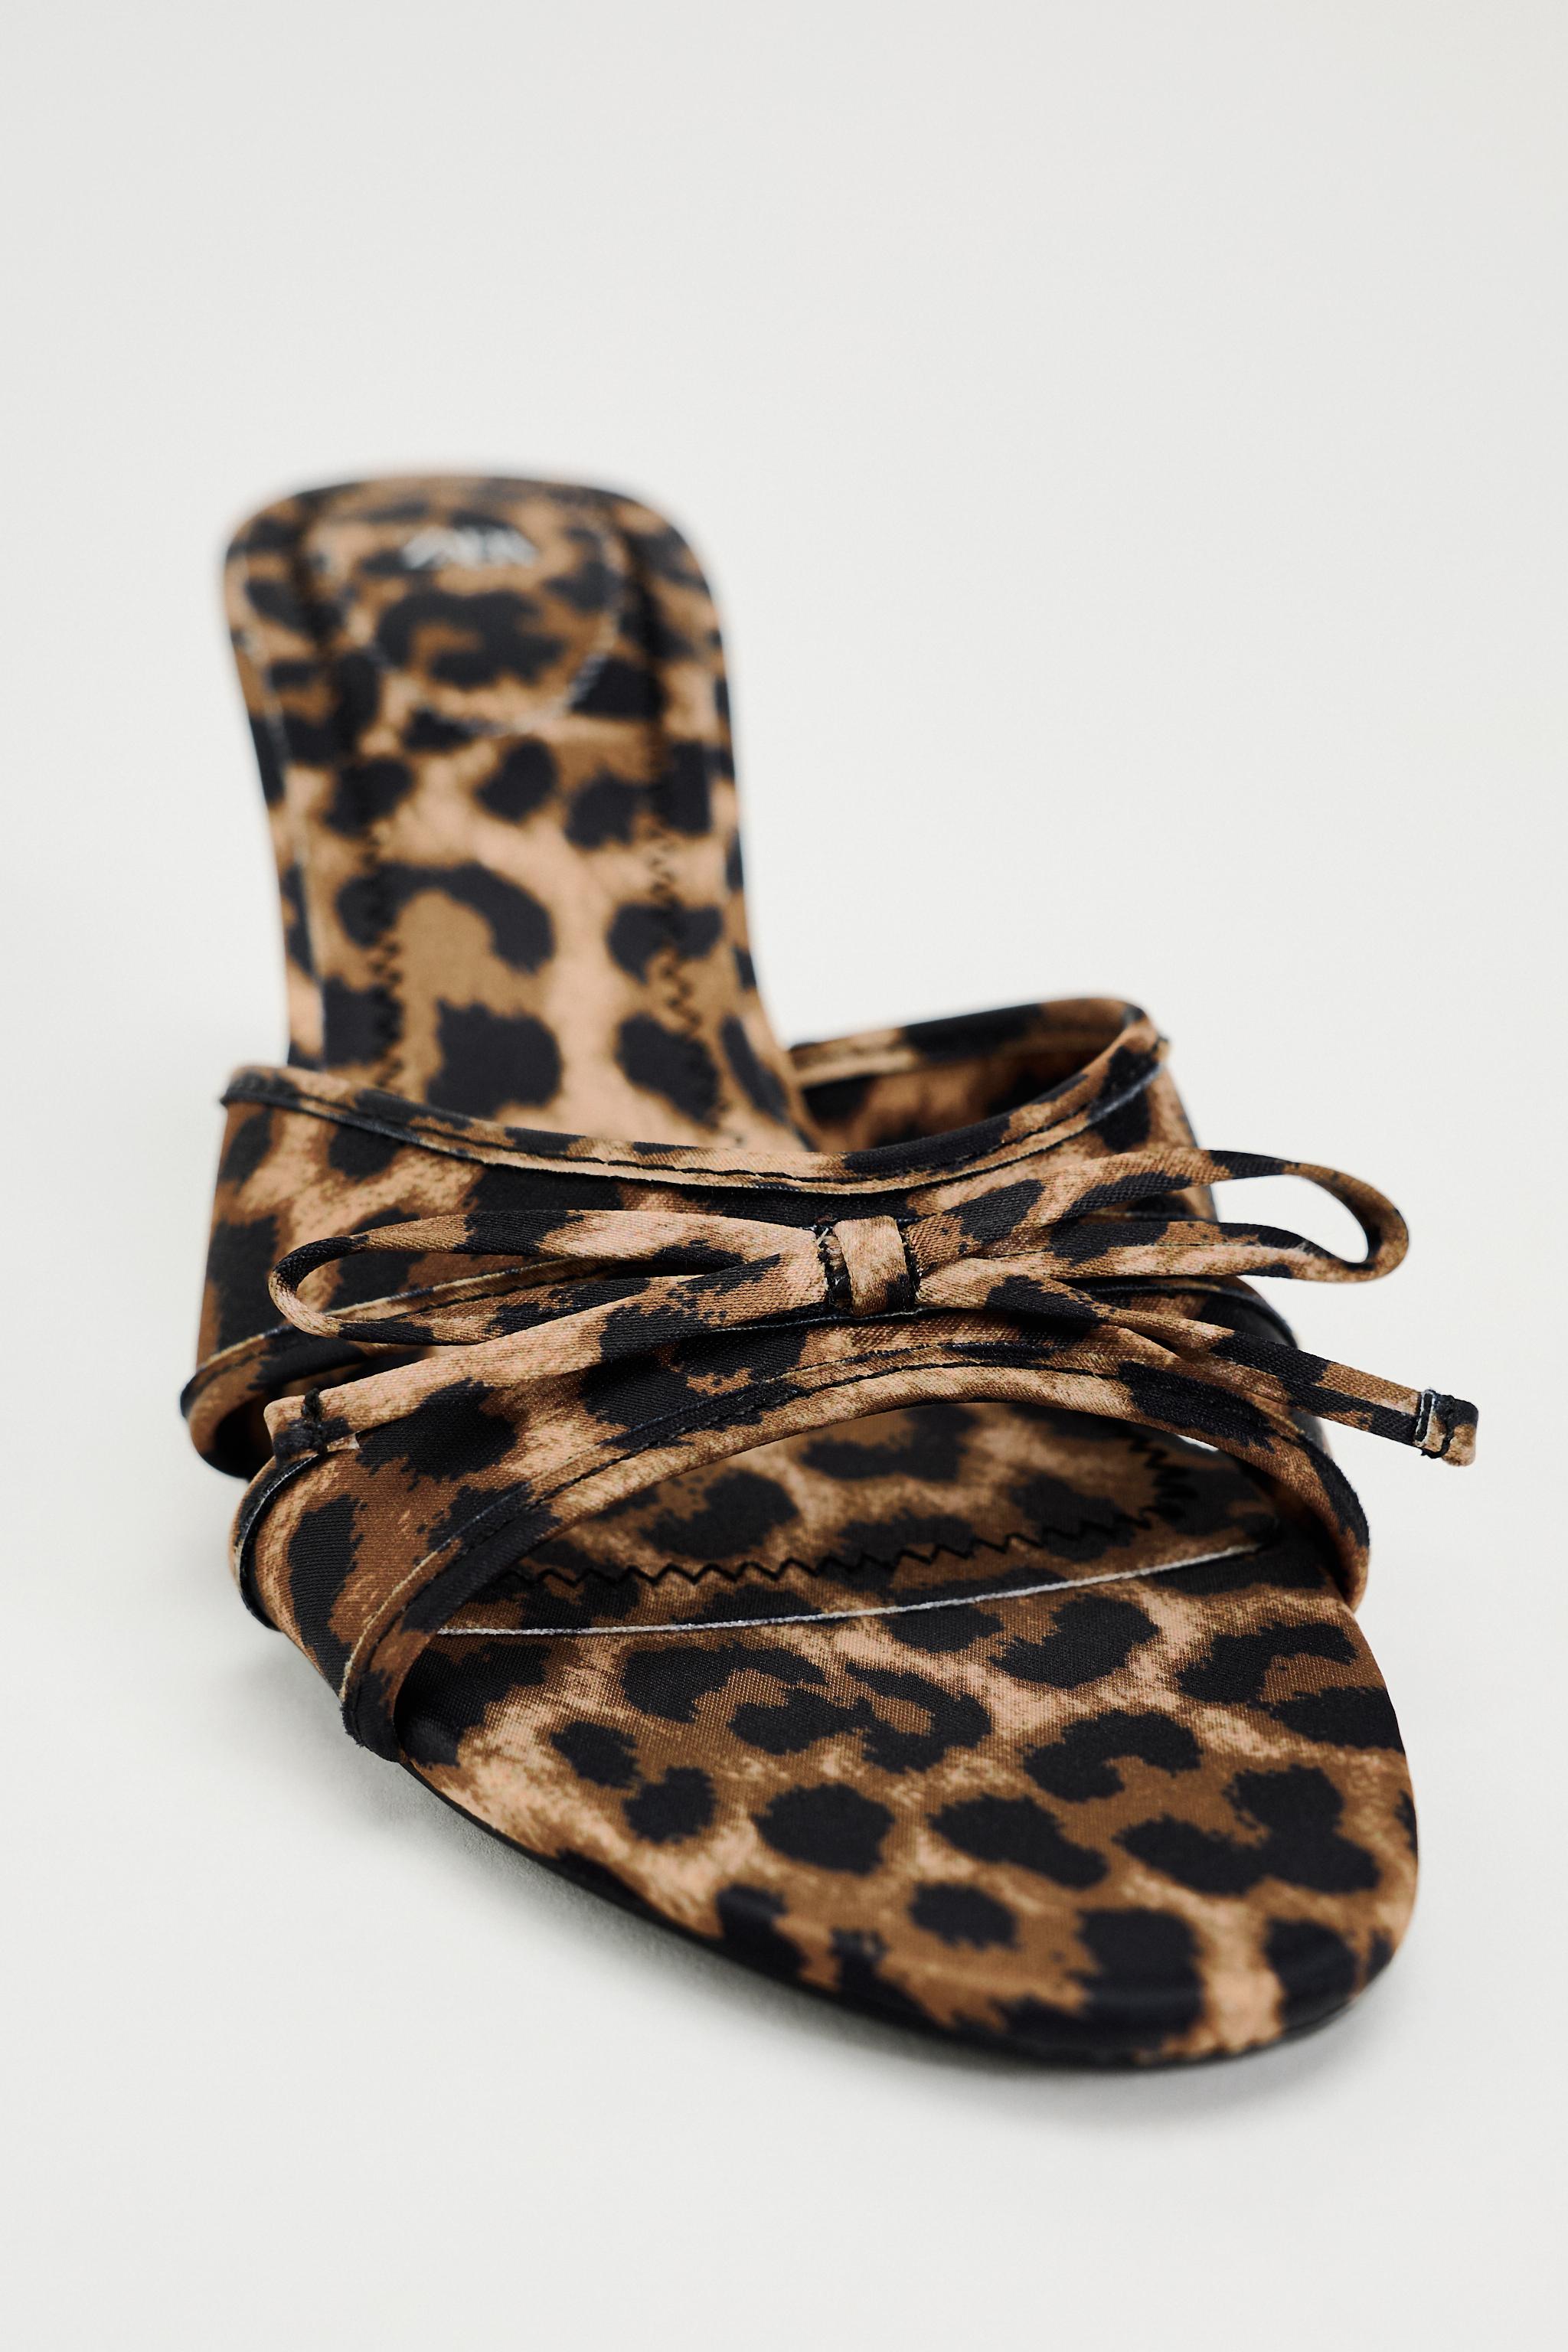  DIAXXH Leopard Print Sandals Women, New Leopard Wedge Soft  Sole Sandal, leopard print sandals, animal print sandals for women (4,  Leopard Print)